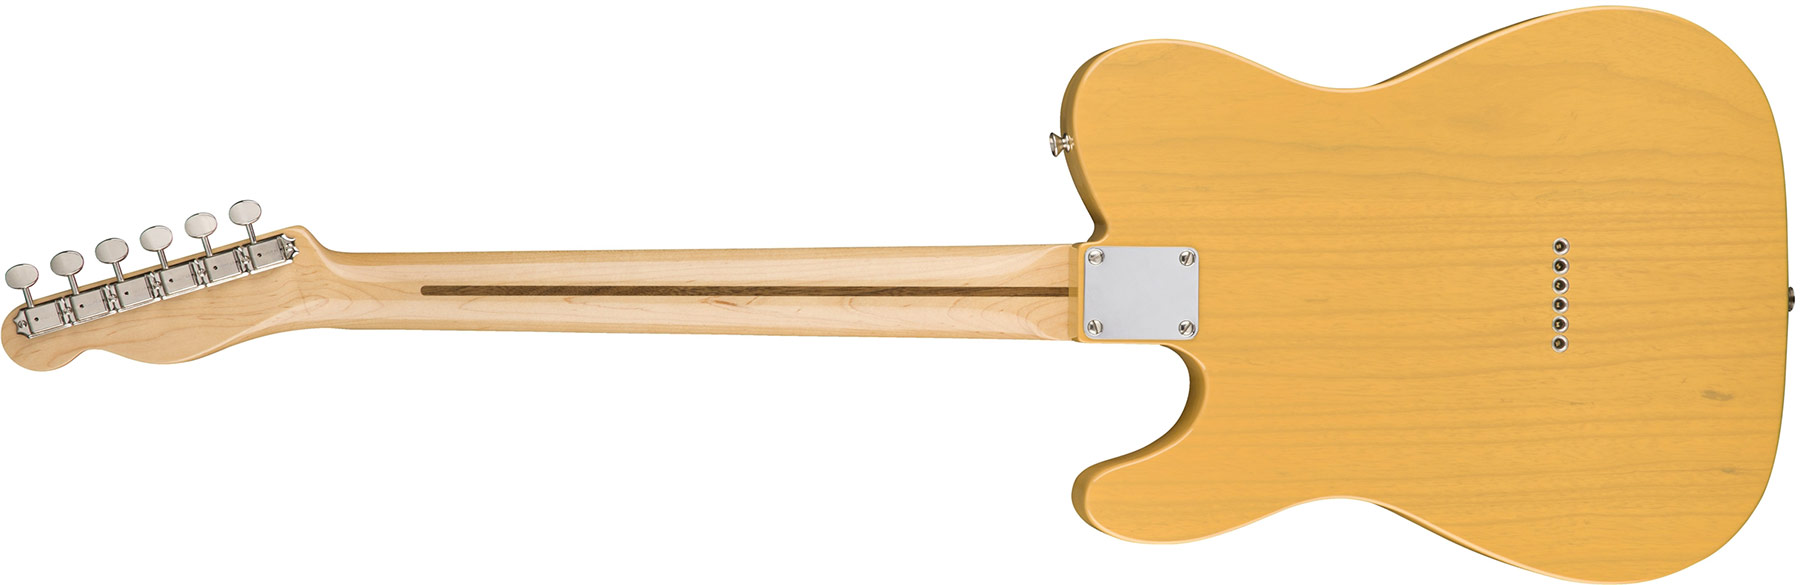 Fender Tele '50s American Original Usa Mn - Butterscotch Blonde - Tel shape electric guitar - Variation 3